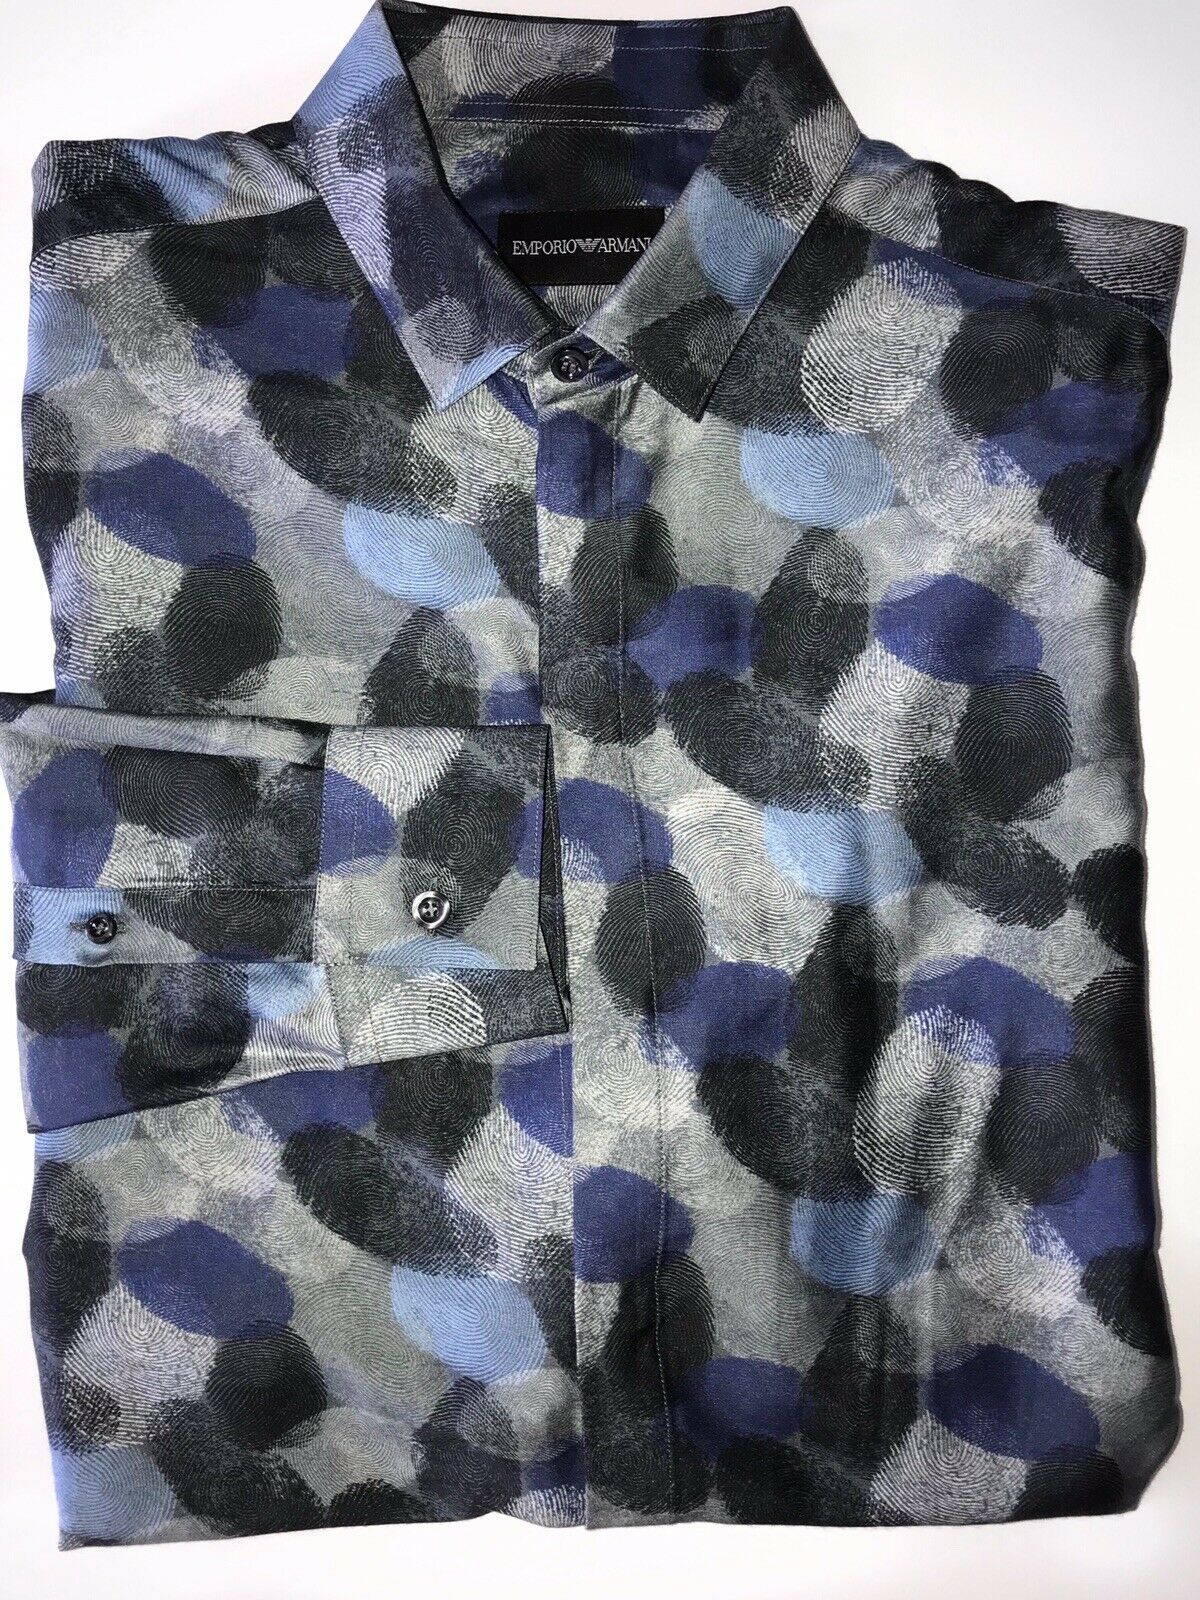 NWT $495 Emporio Armani Men's Gray and Blue Dress Shirt Size 37/14.5 V1CC2T